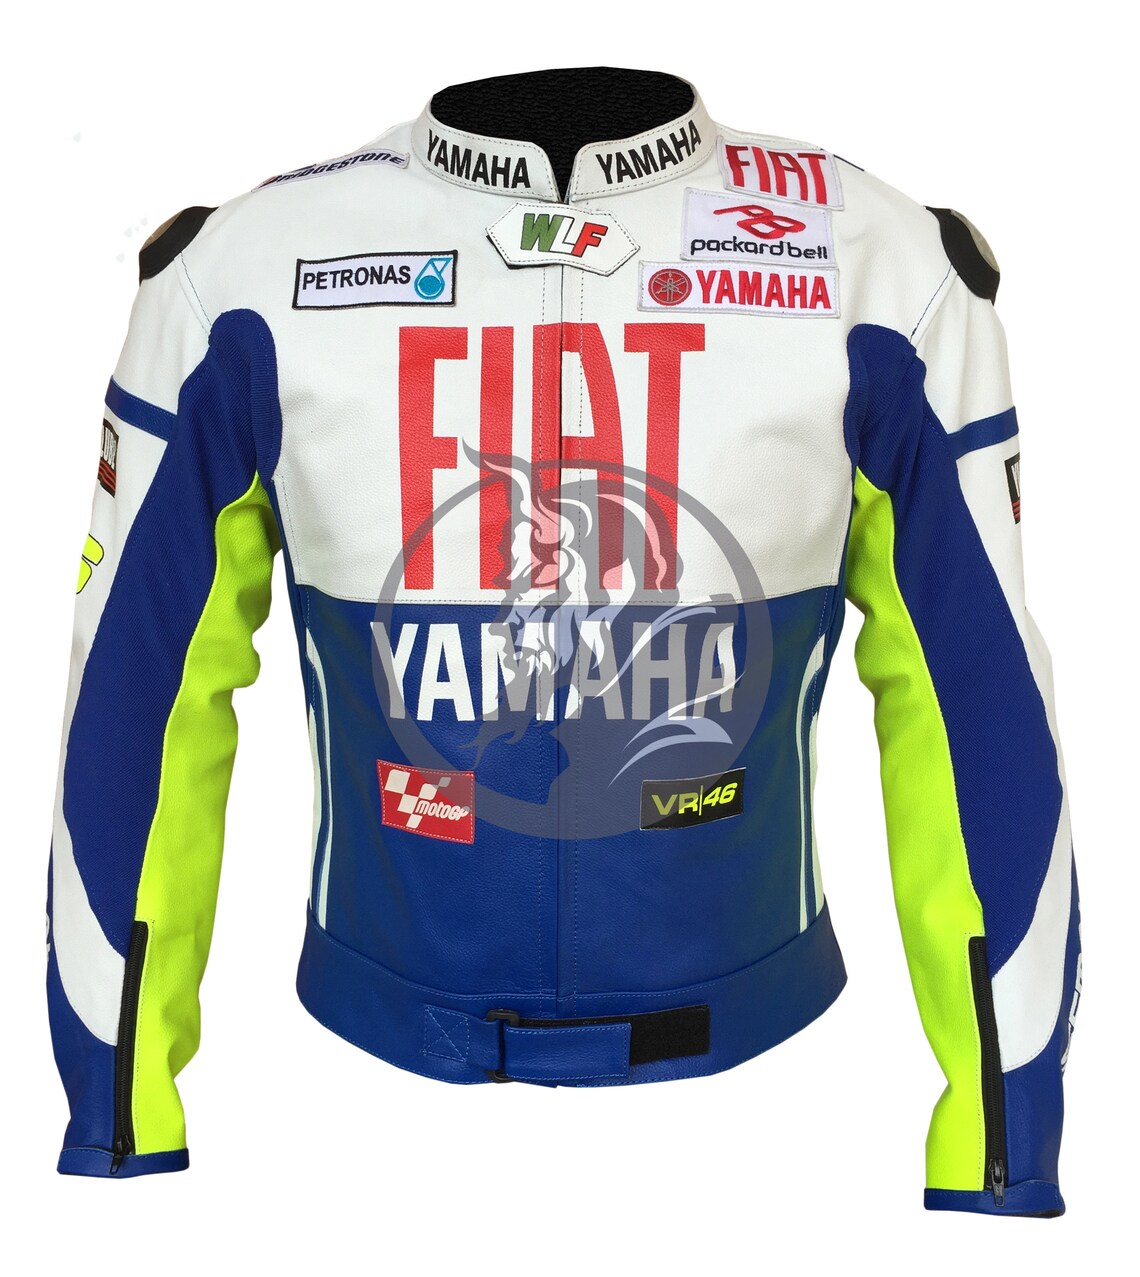 Yamaha FIAT VR46 MotoGP Motorcycle Jacket with Protection CE | Etsy